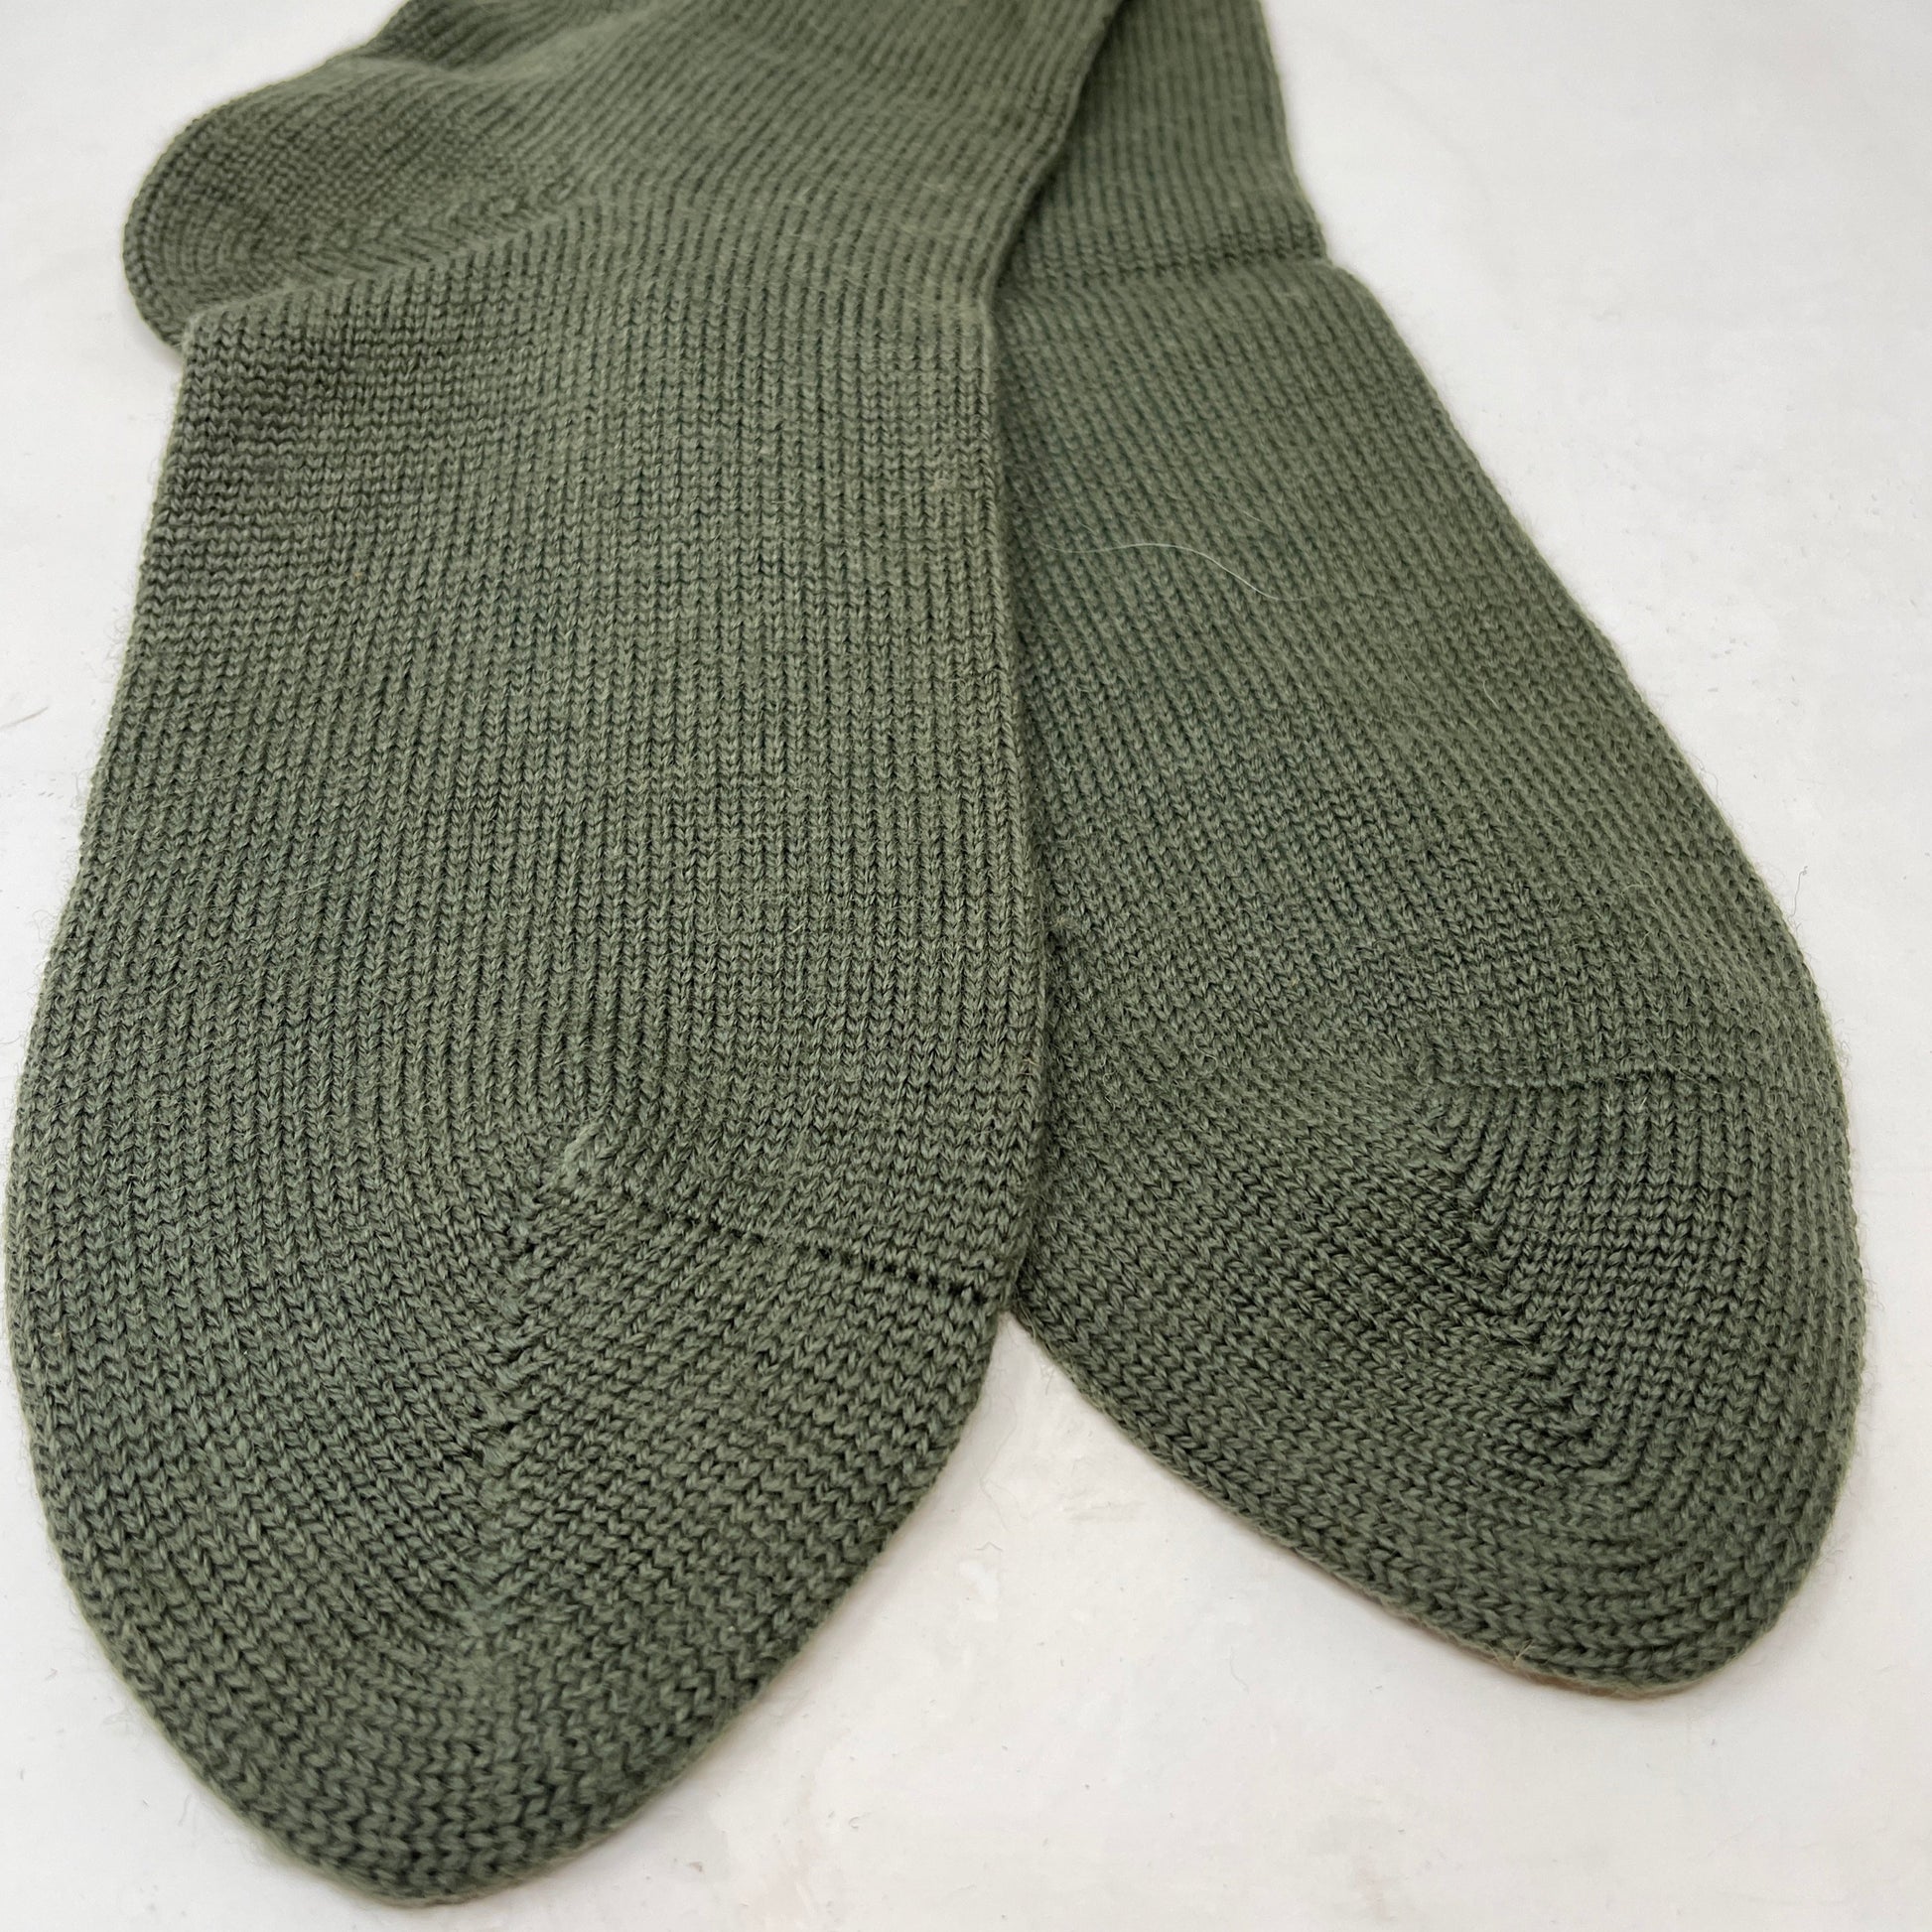 British Jungle Green Rot Proof Socks 1945